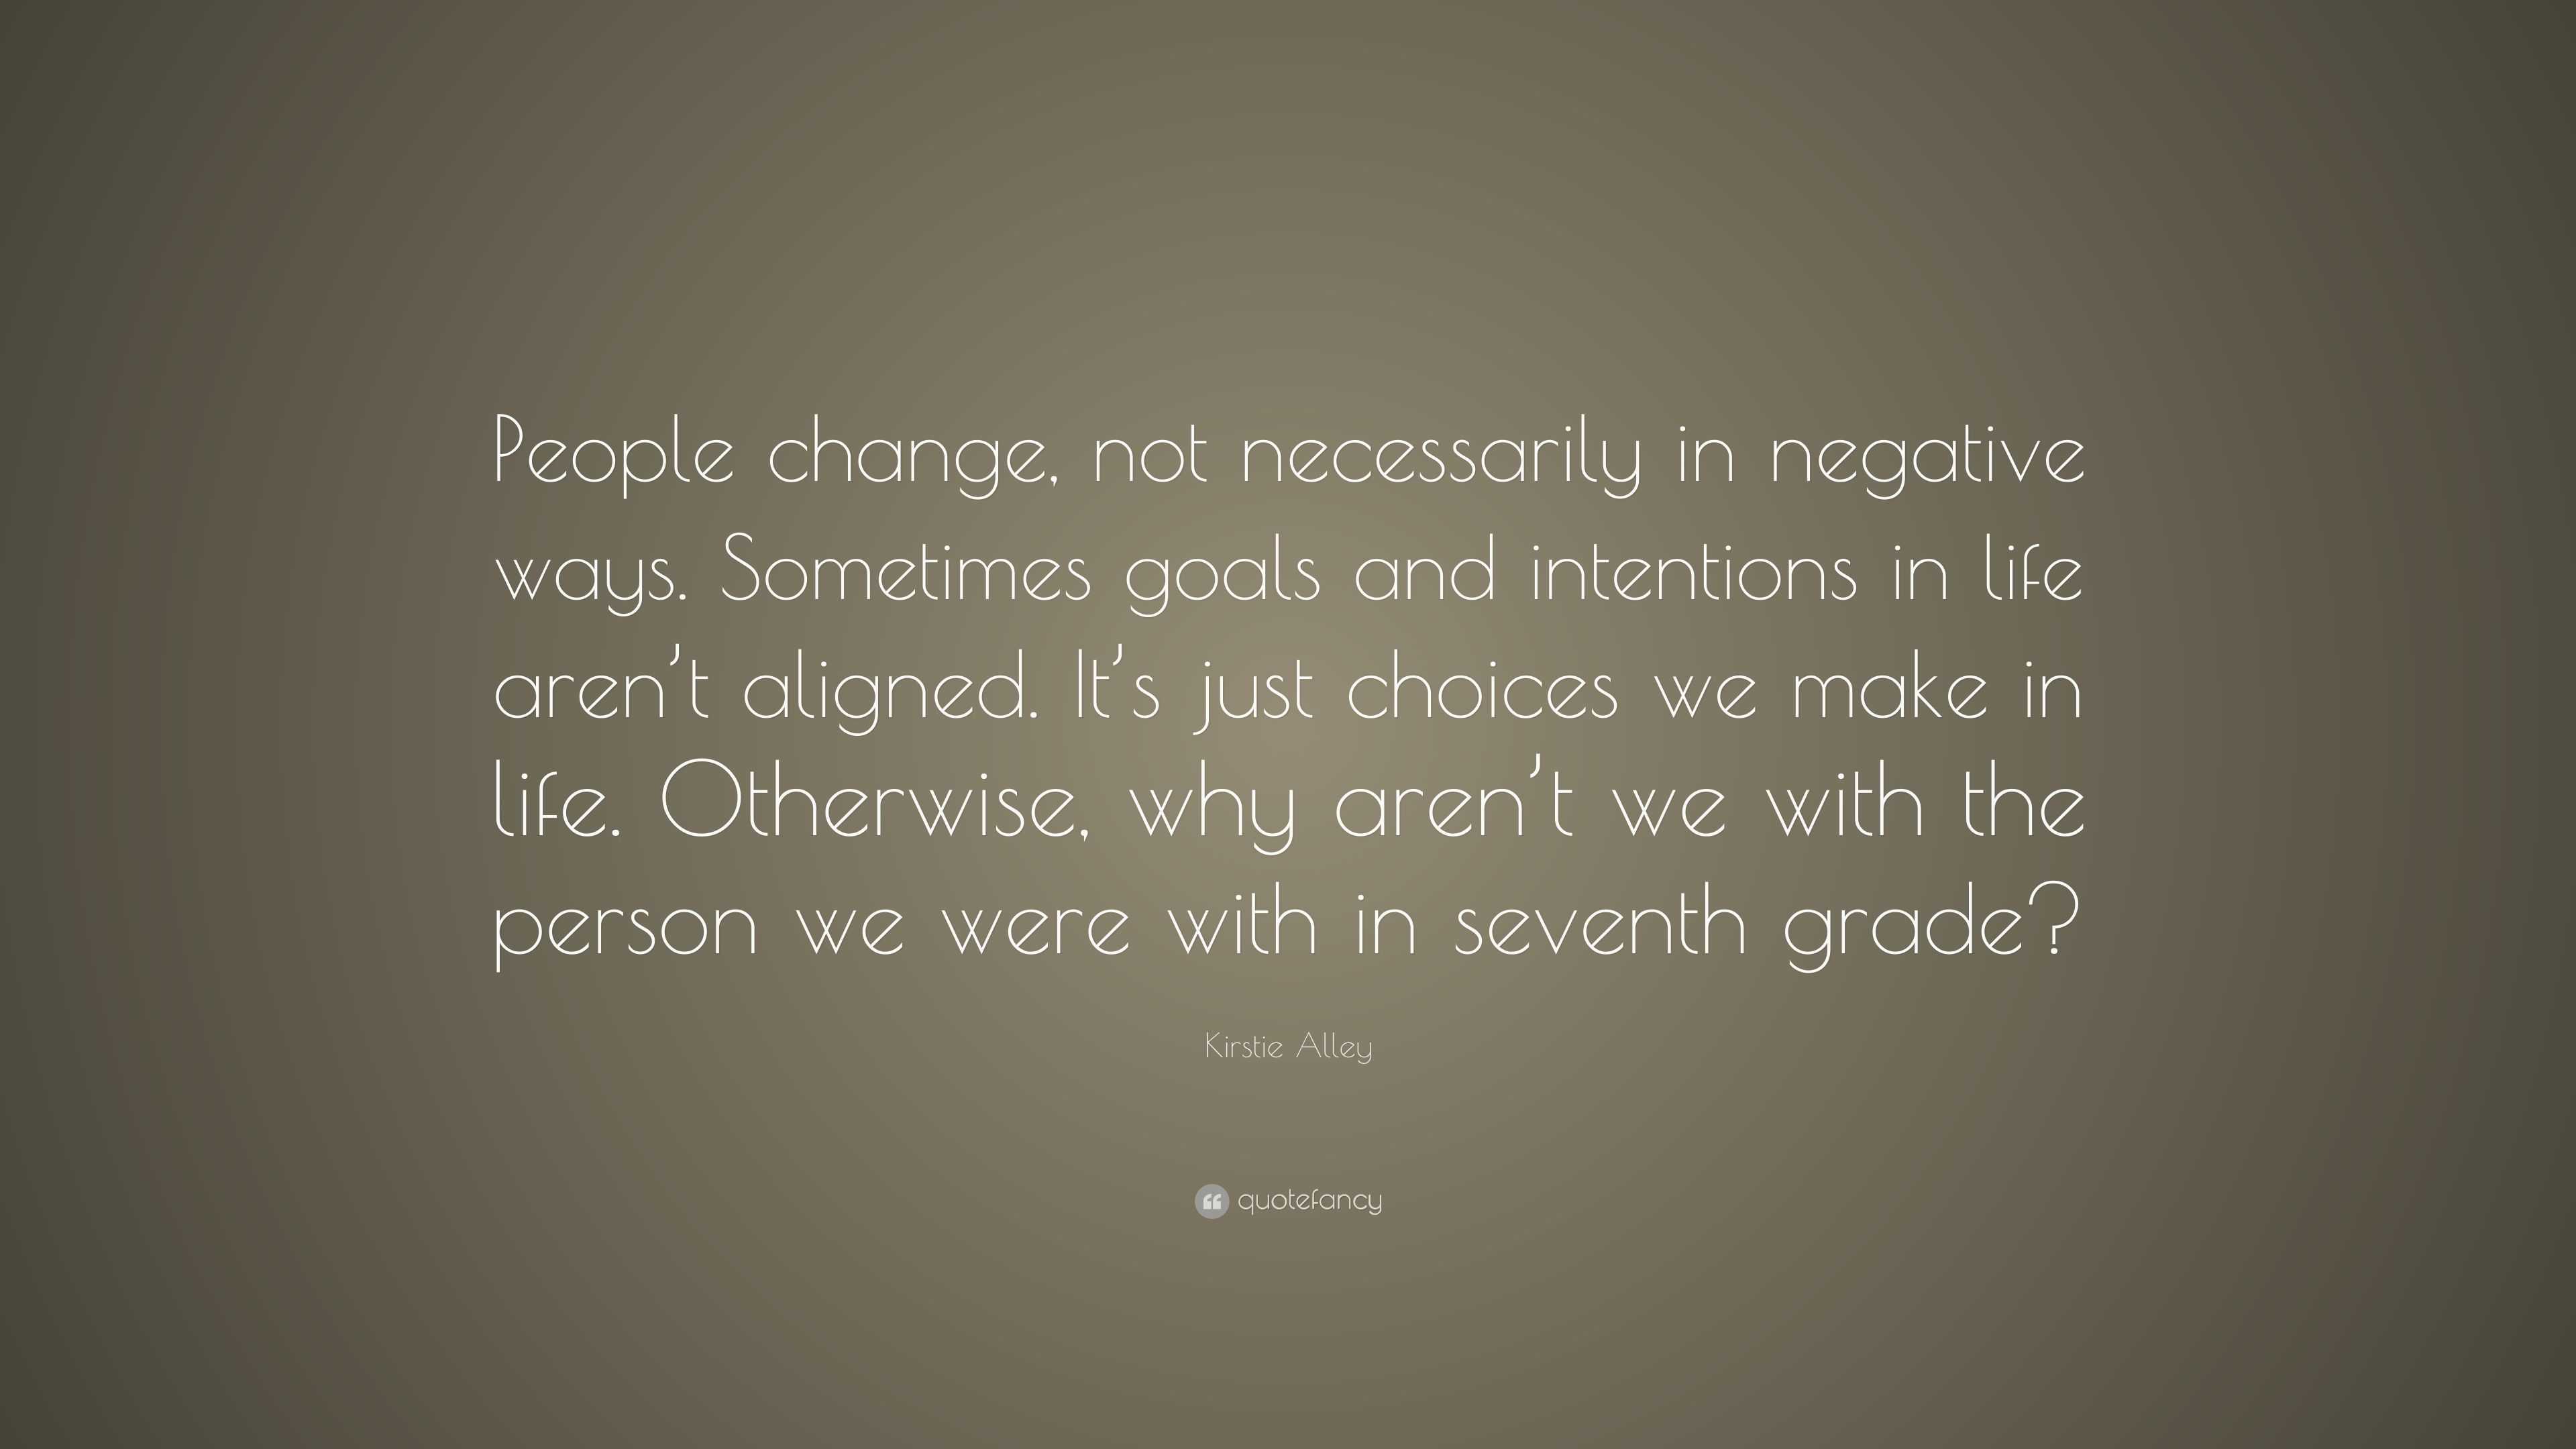 Kirstie Alley Quote: “People change, not necessarily in negative ways ...